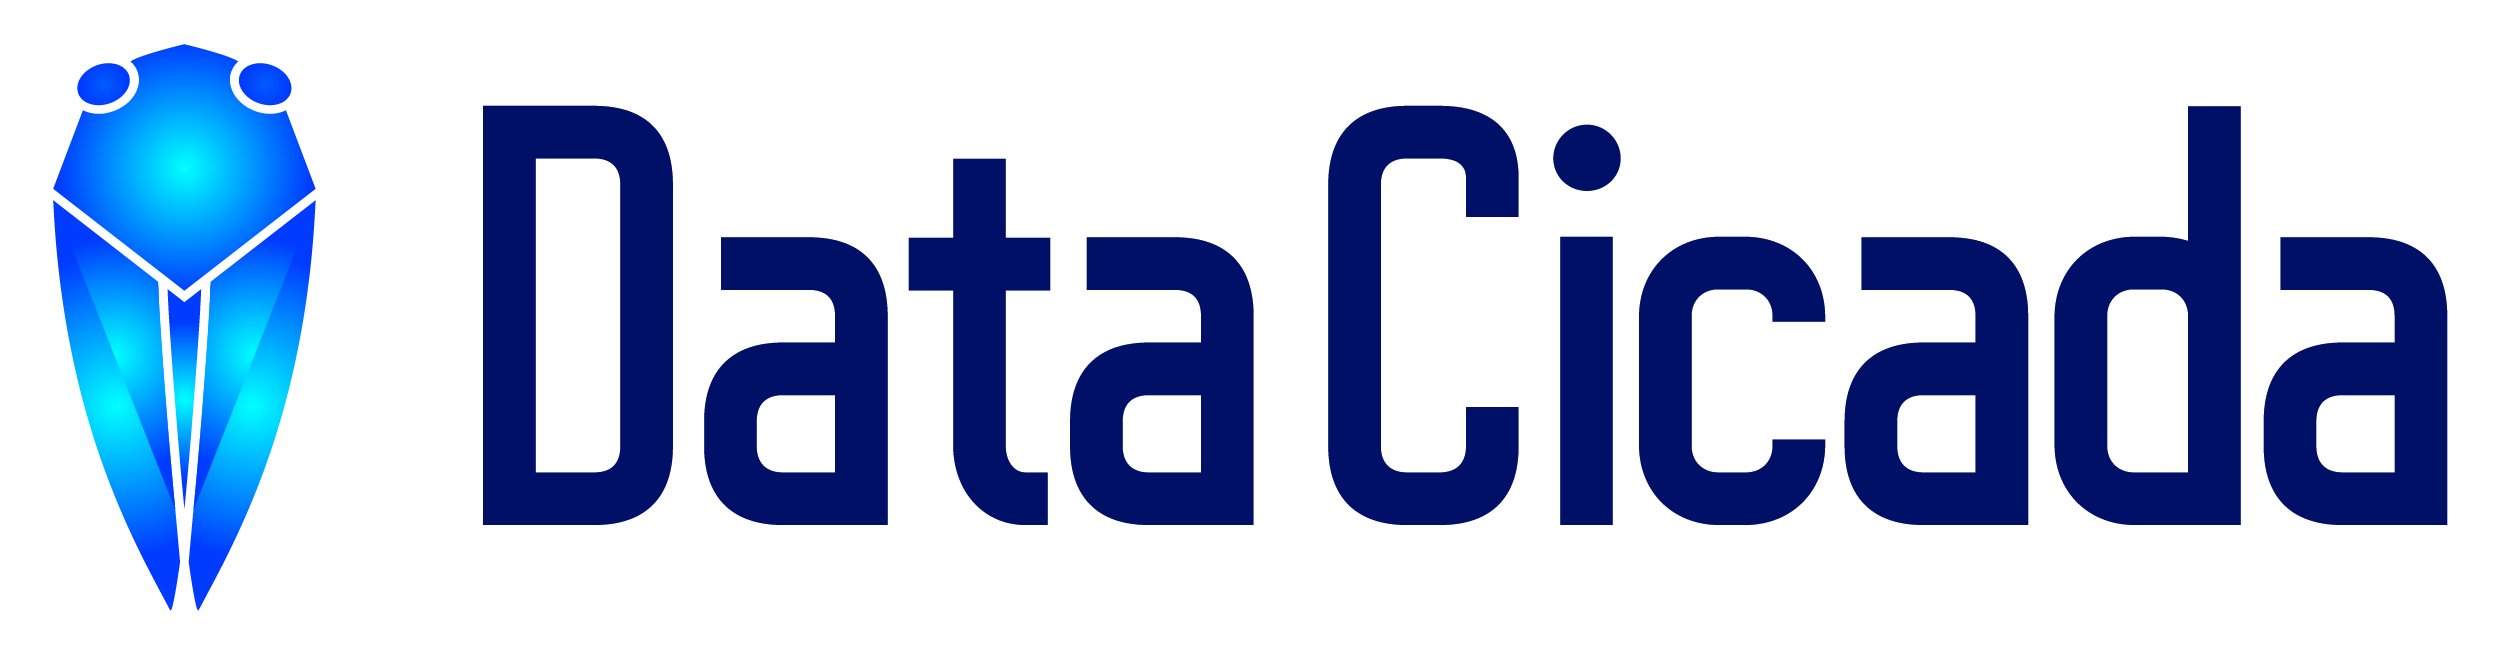 Datacicada primary logo cmyk highres